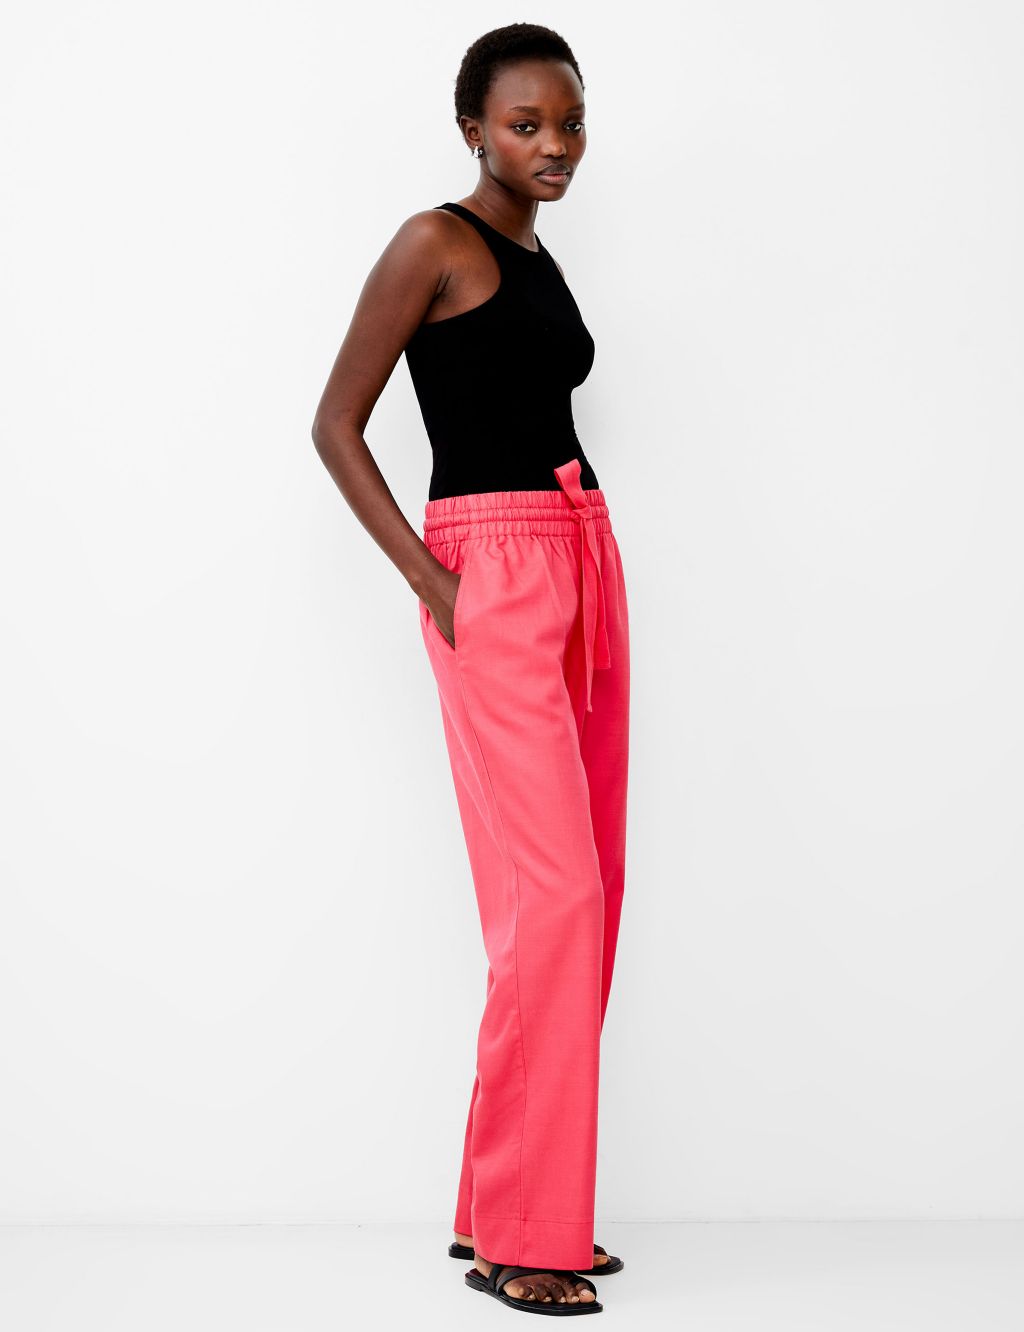 Women's Pink Trousers